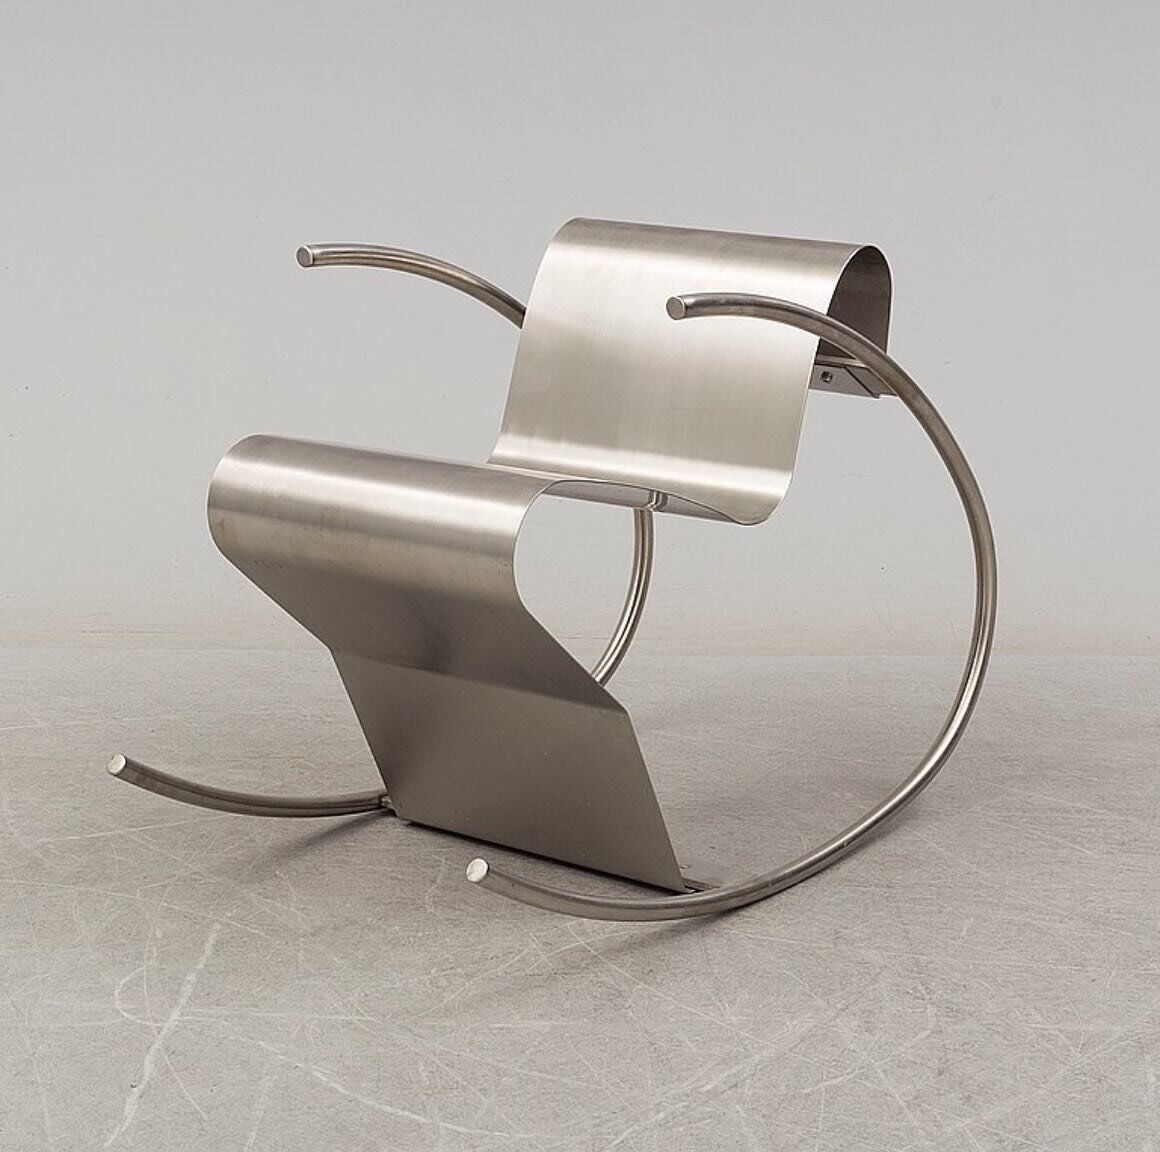 &lsquo;Rock n Roll&rsquo; rocking chair by Sigurdur Gustafsson ❣︎
&bull;
&bull;
&bull;
#architecturaldigest #architecturalporn #calminghomes #dailyinspiration #designinspo #houseoftheday #moderndesign #neutralhomes #neutraltones #residentialdesign #r